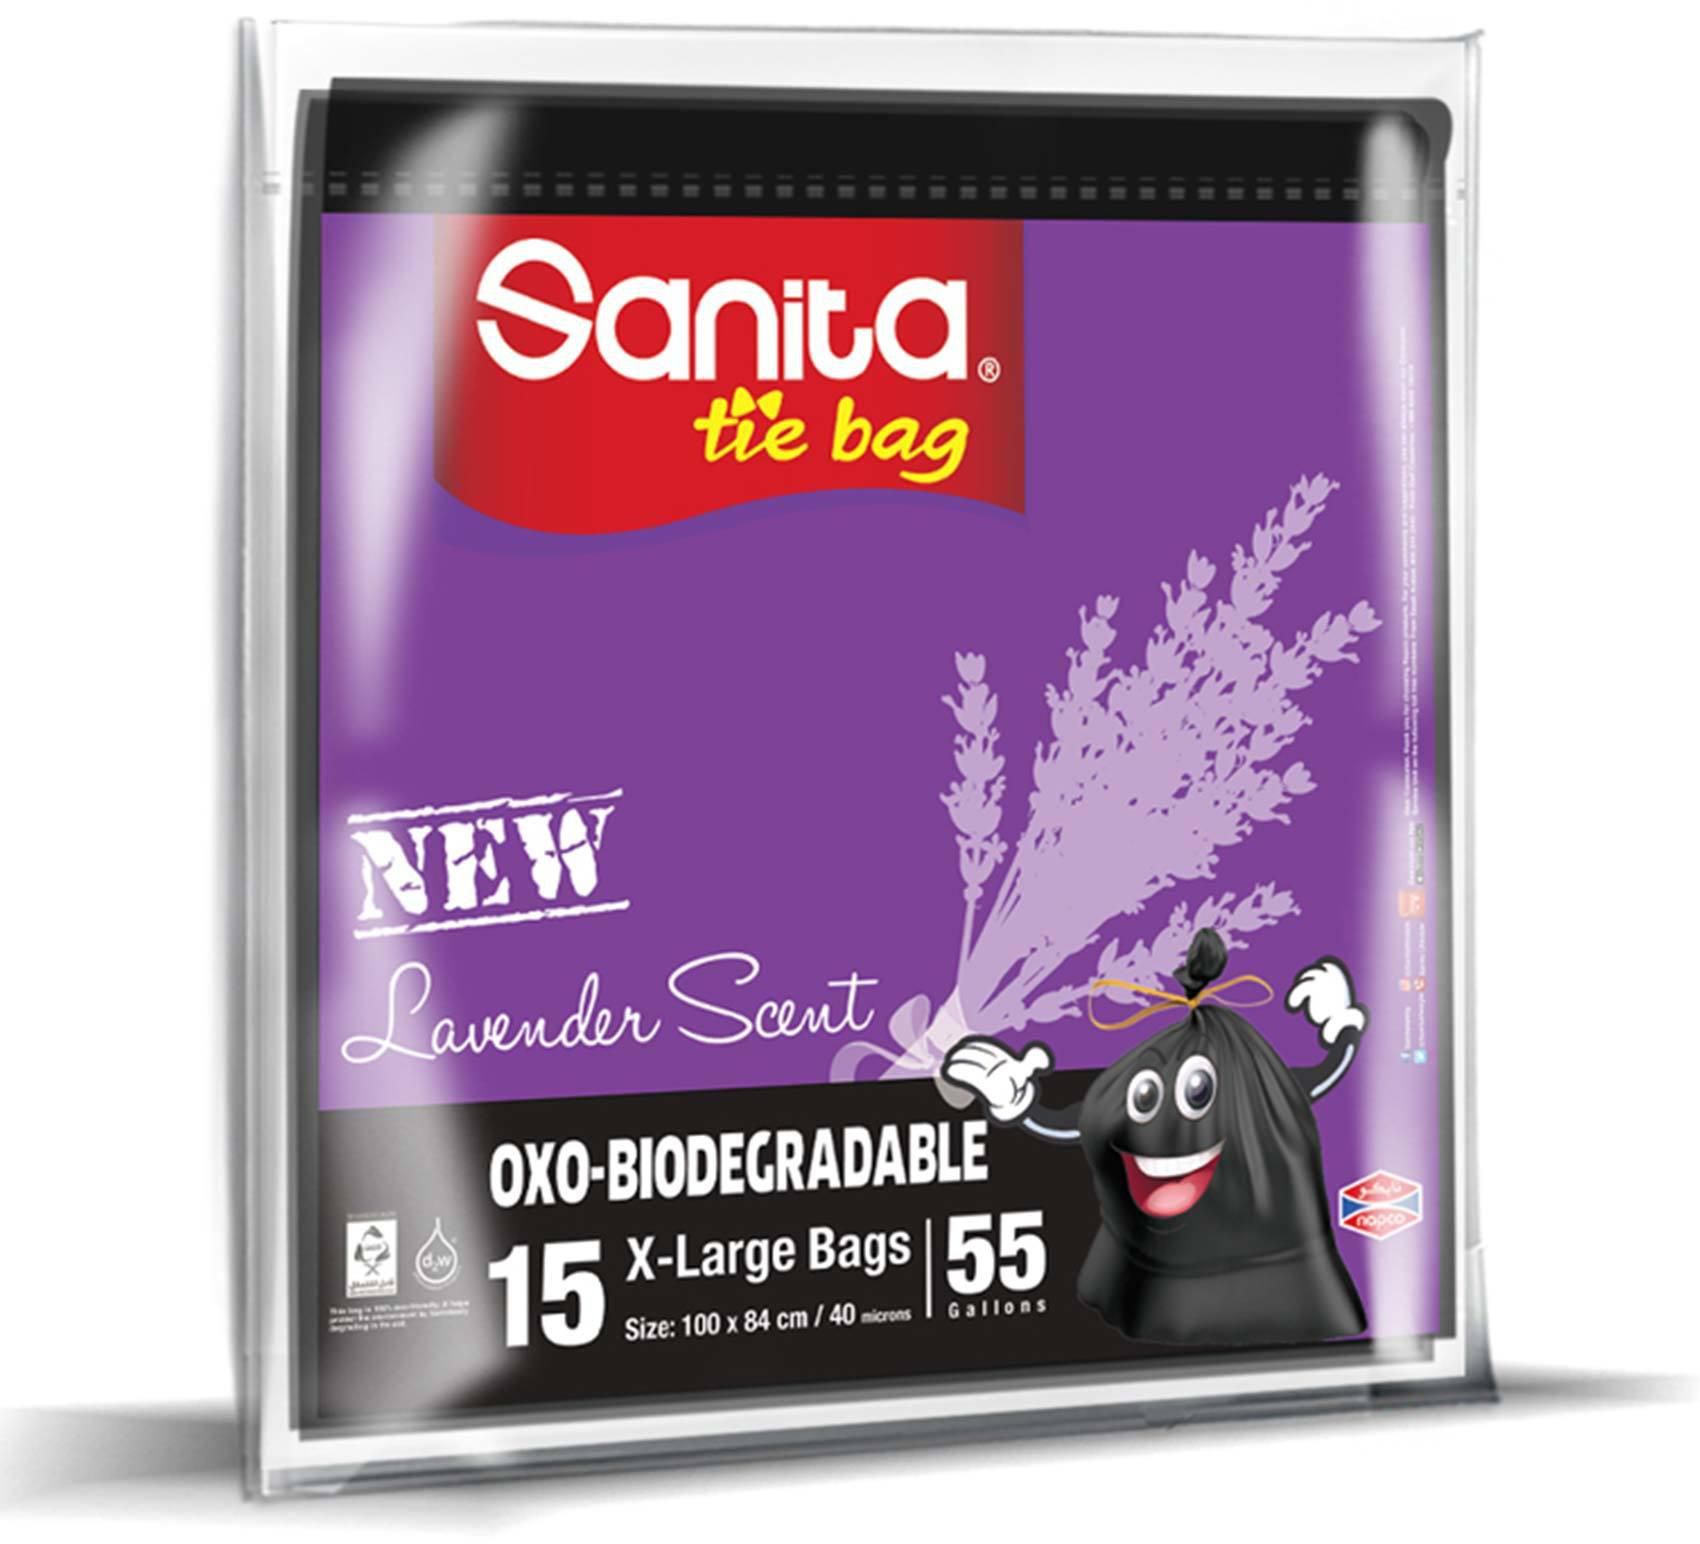 Sanita tie bag lavender scent biodegradable trash bags 55 gallons x 15 bags x-large size